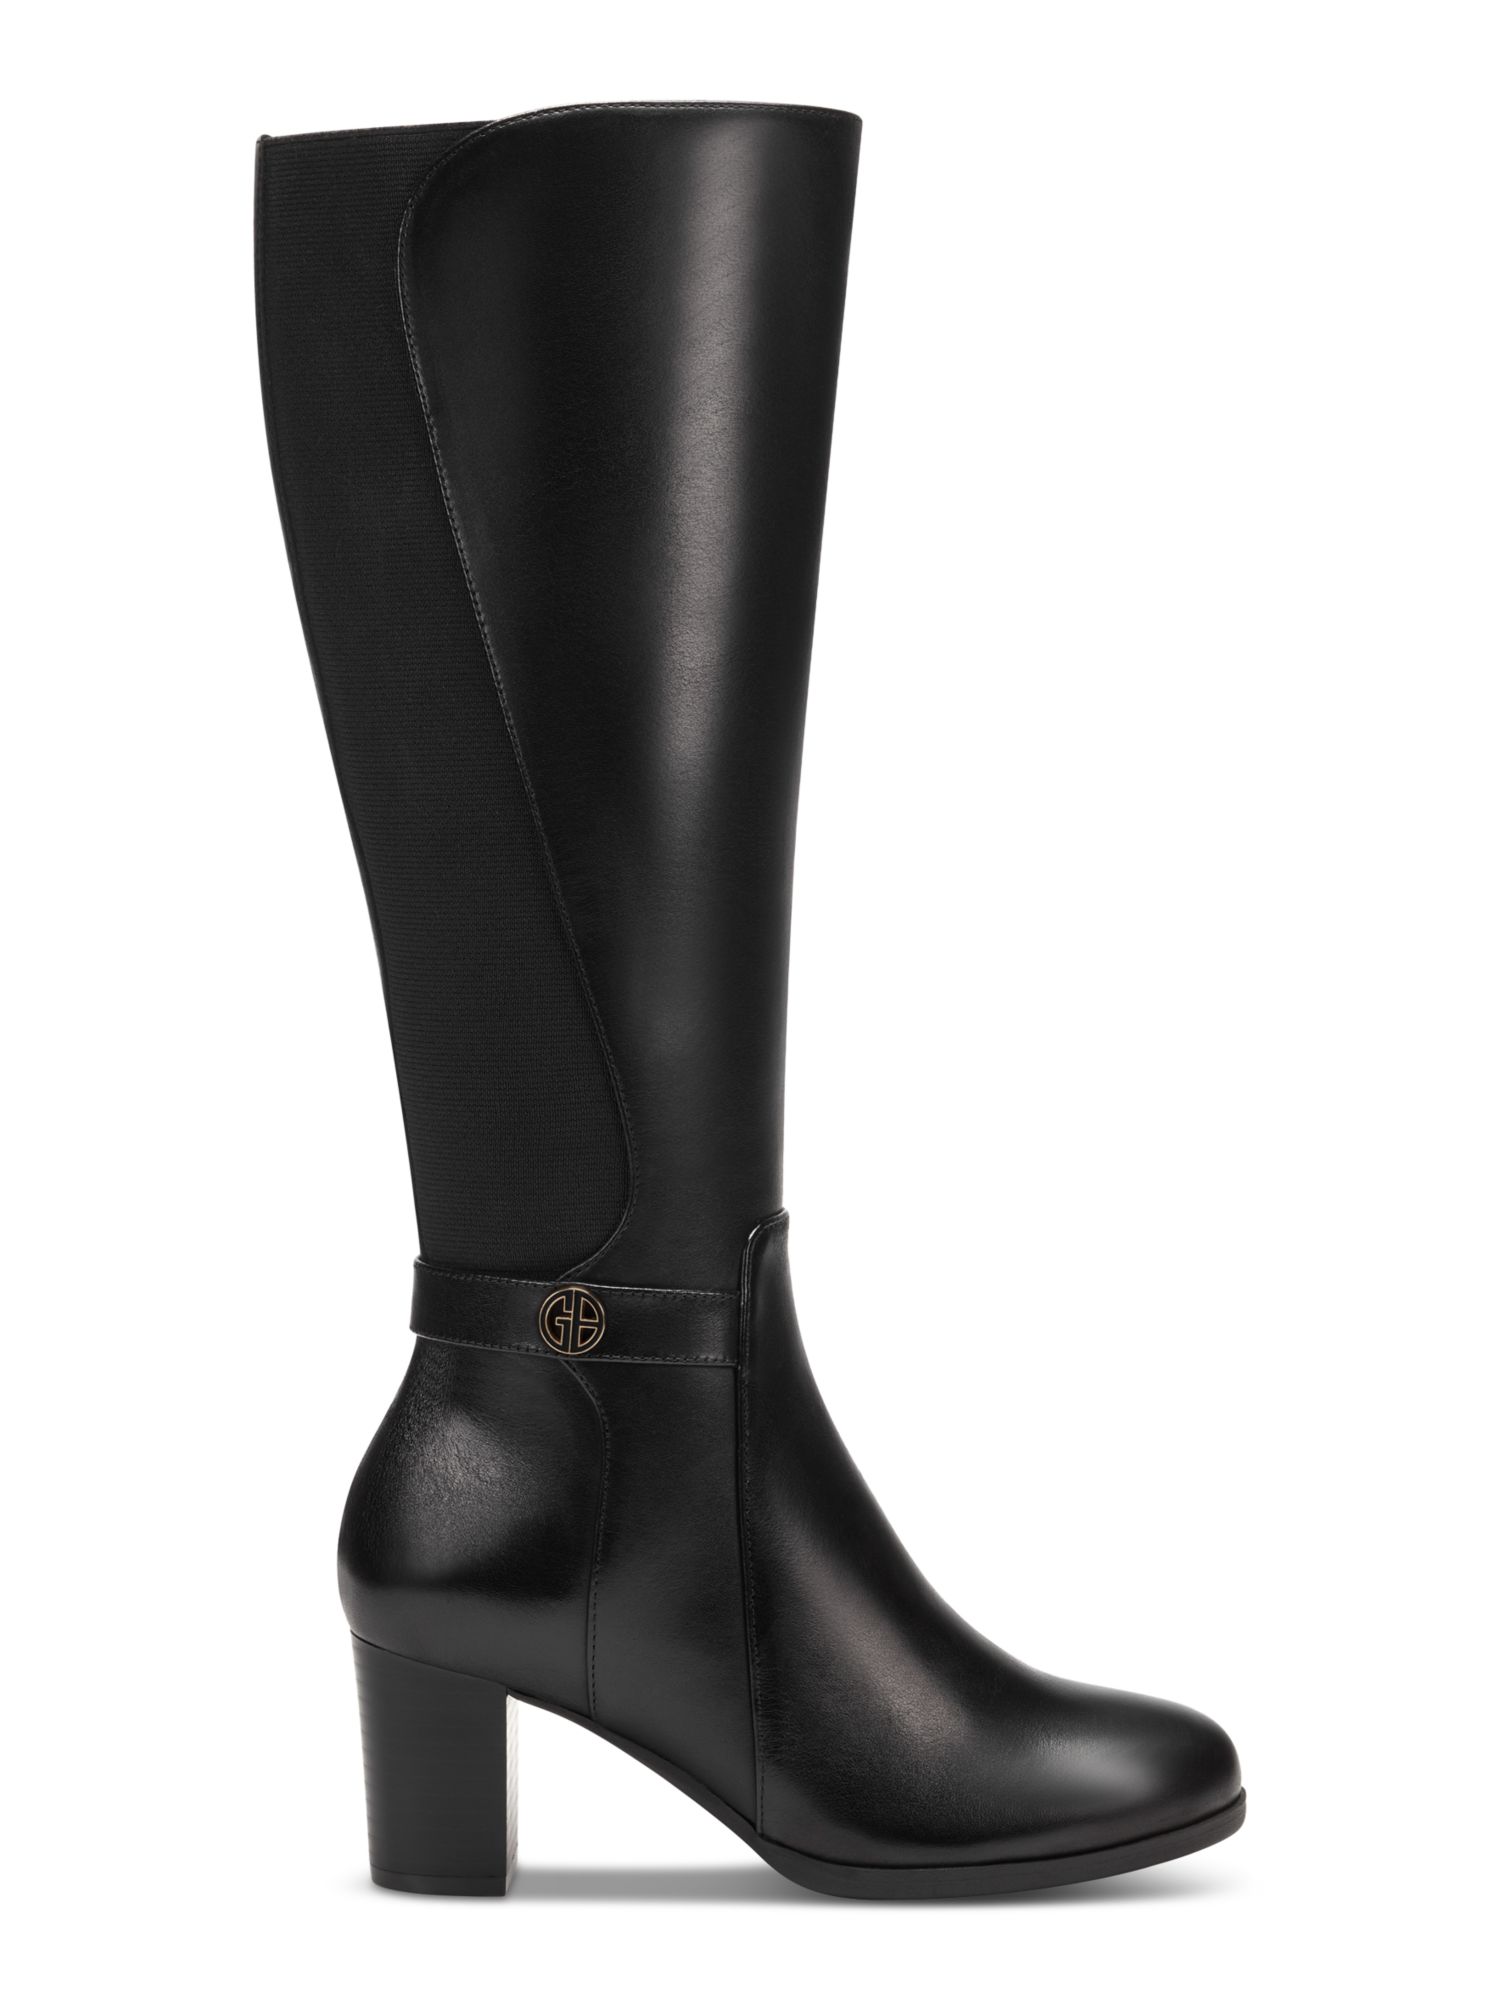 GIANI BERNINI Womens Black Buckled Strap Detail Goring Cushioned Mia Round Toe Block Heel Zip-Up Leather Riding Boot 7 M